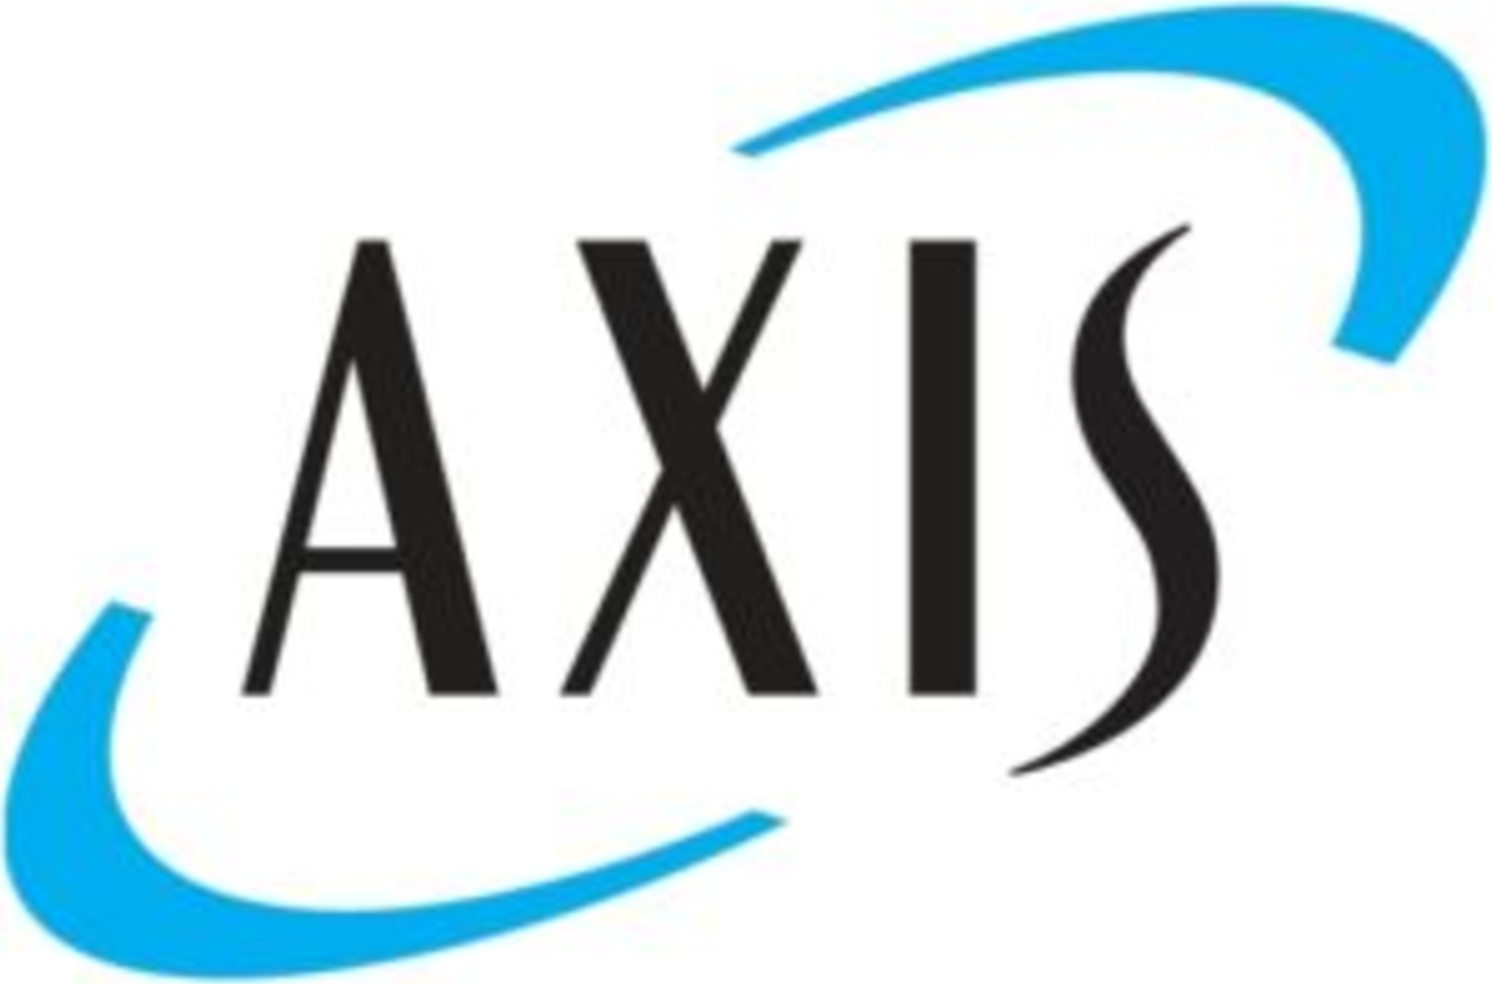 Company - Axis Capital Holdings